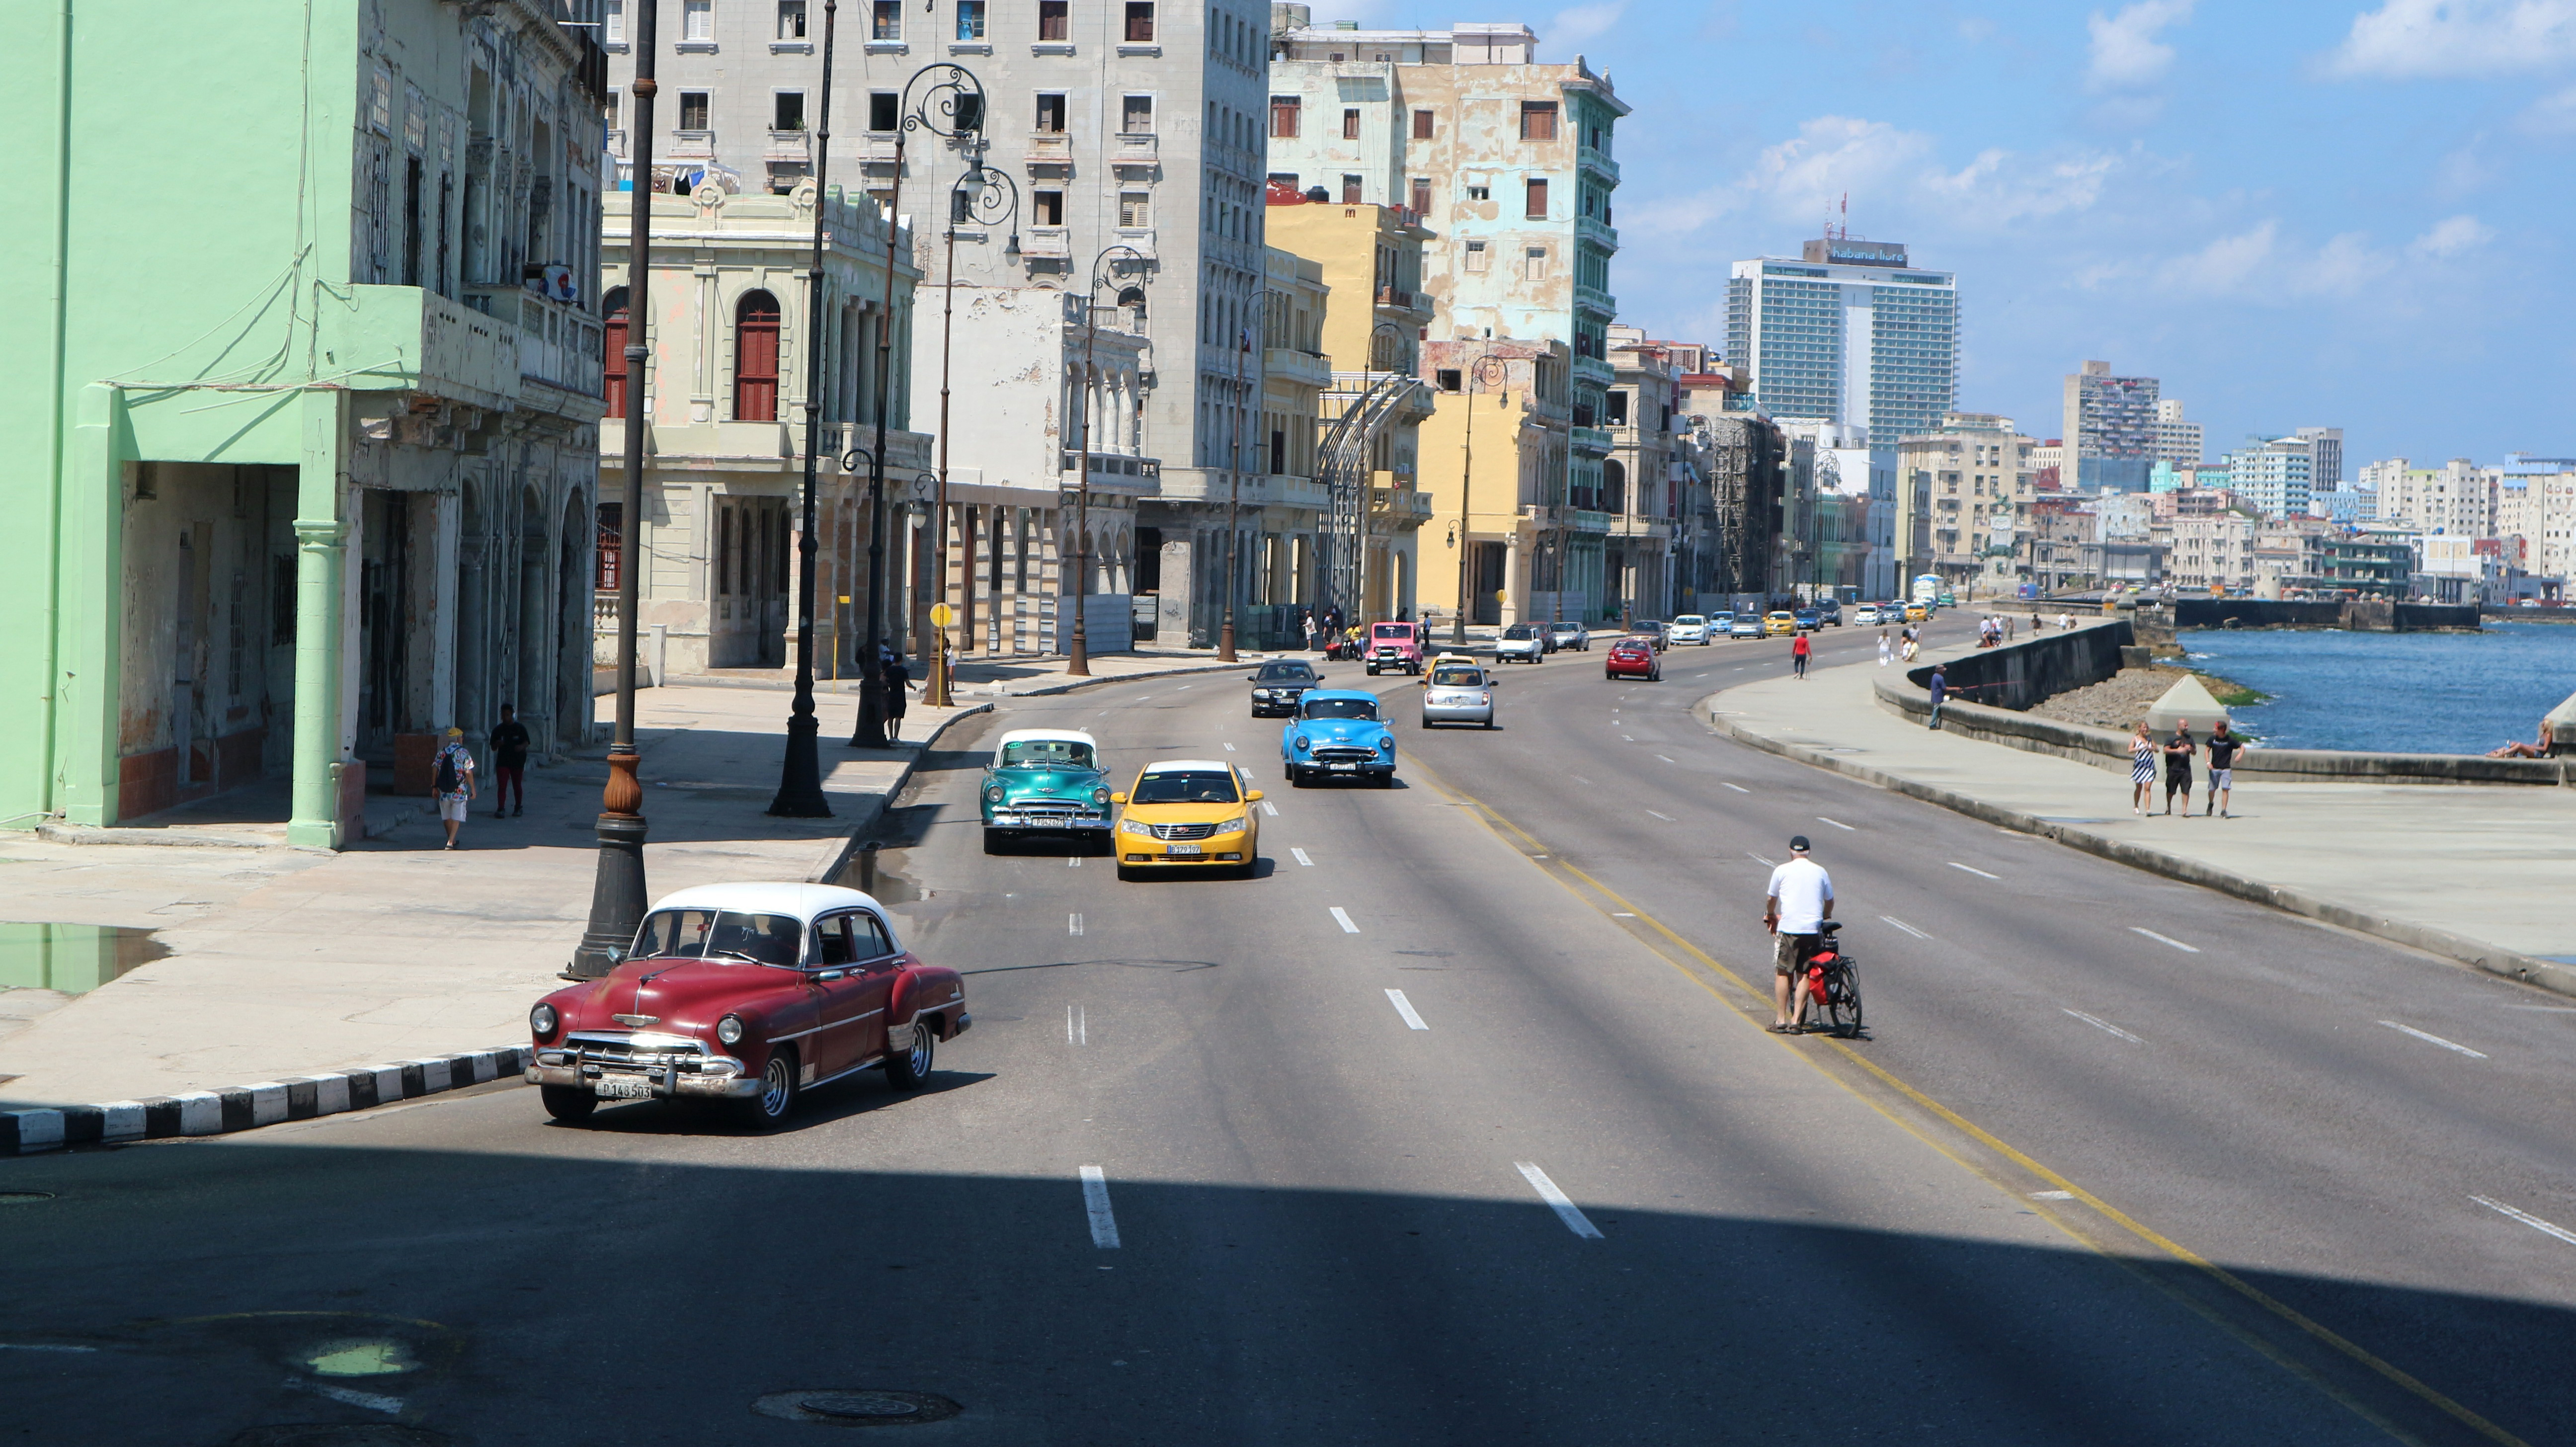 Cuba city view